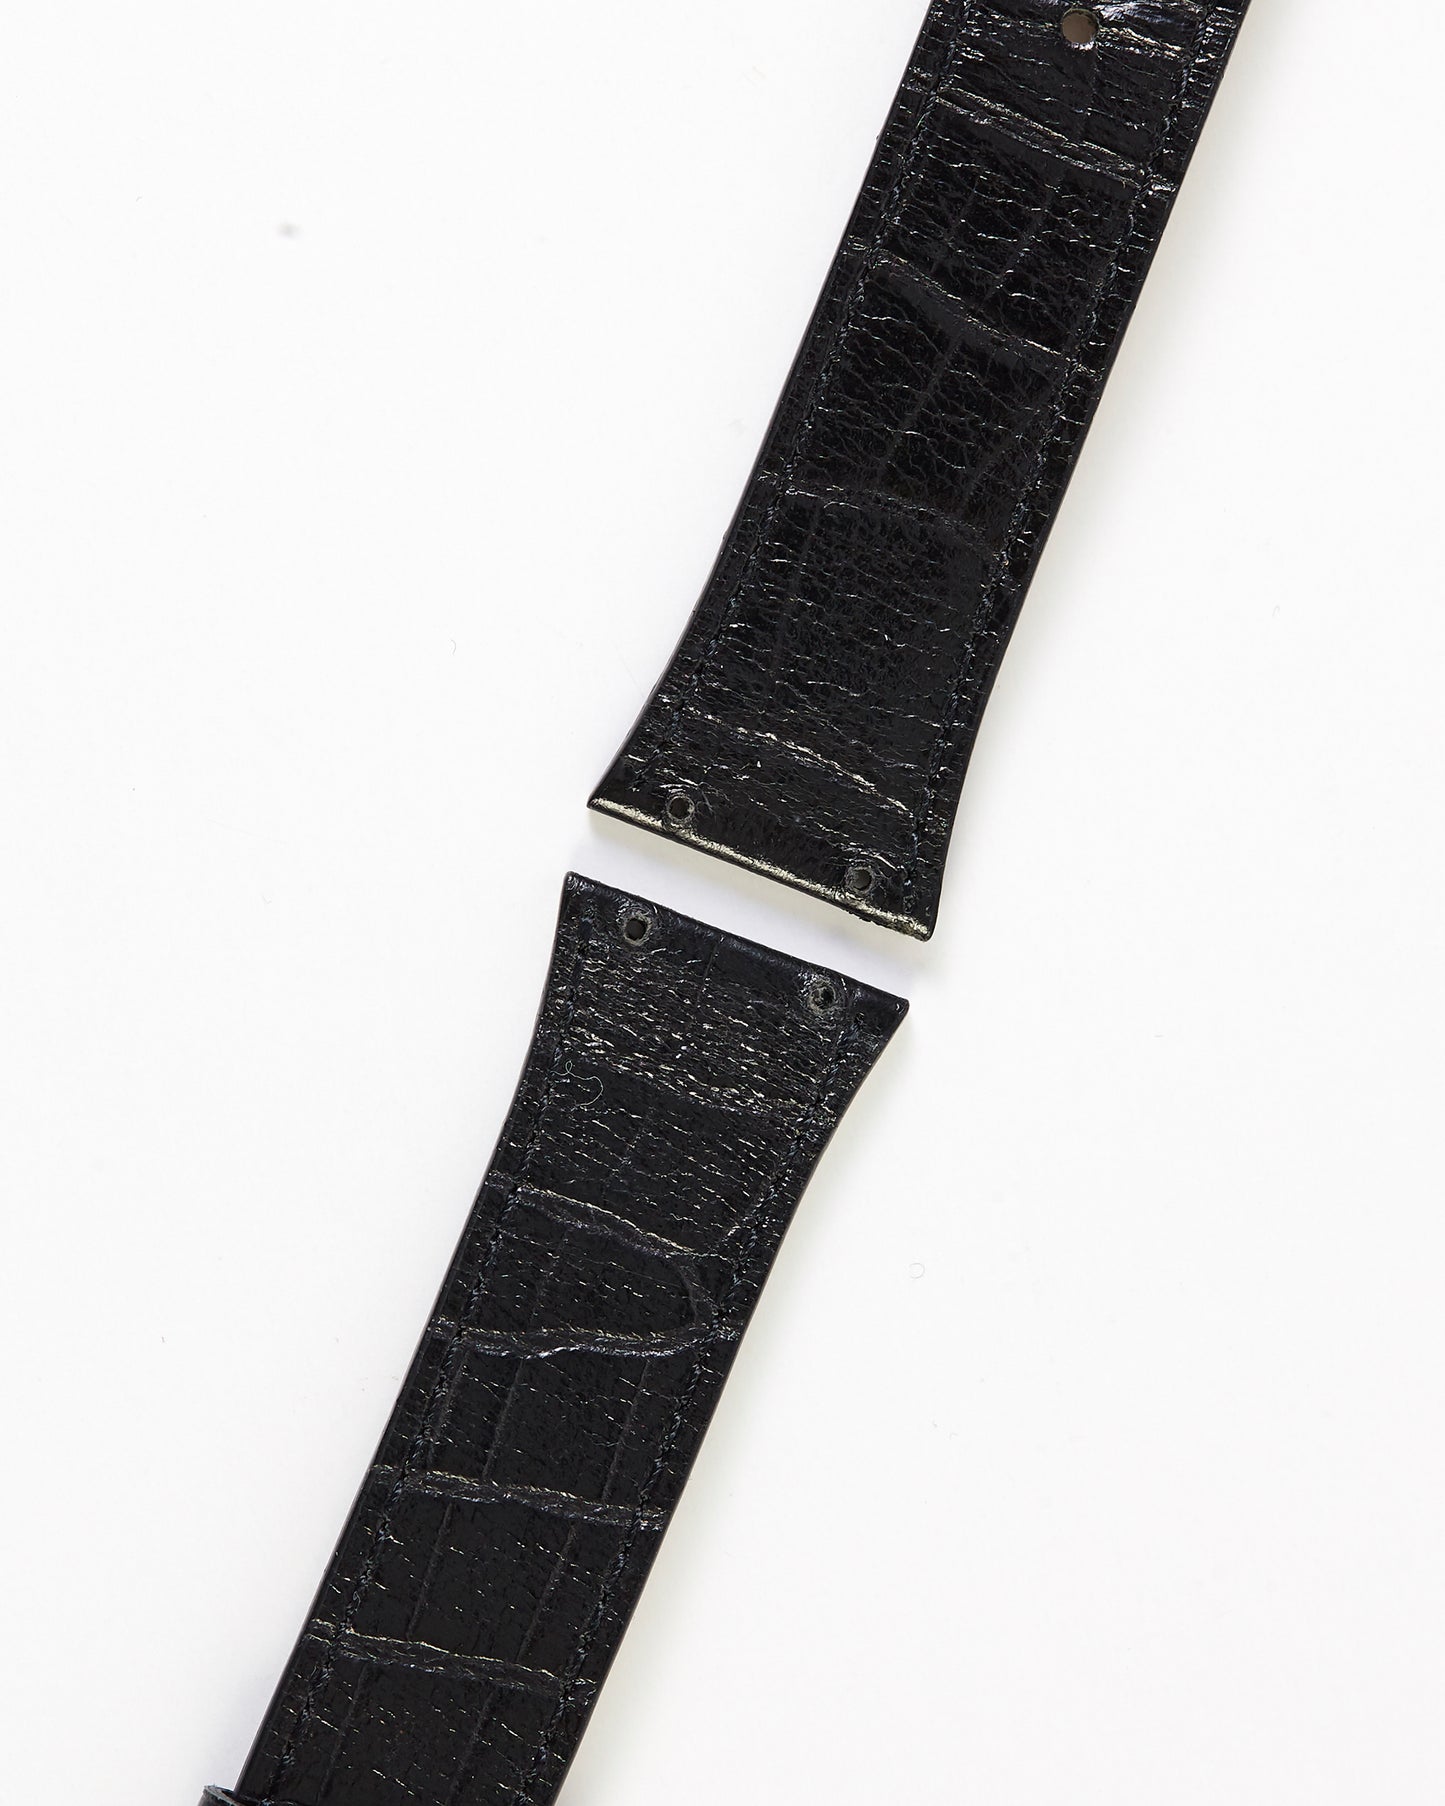 Ecclissi 10456 Black Alligator Grain Leather Strap  20mm x 16mm with screw holes